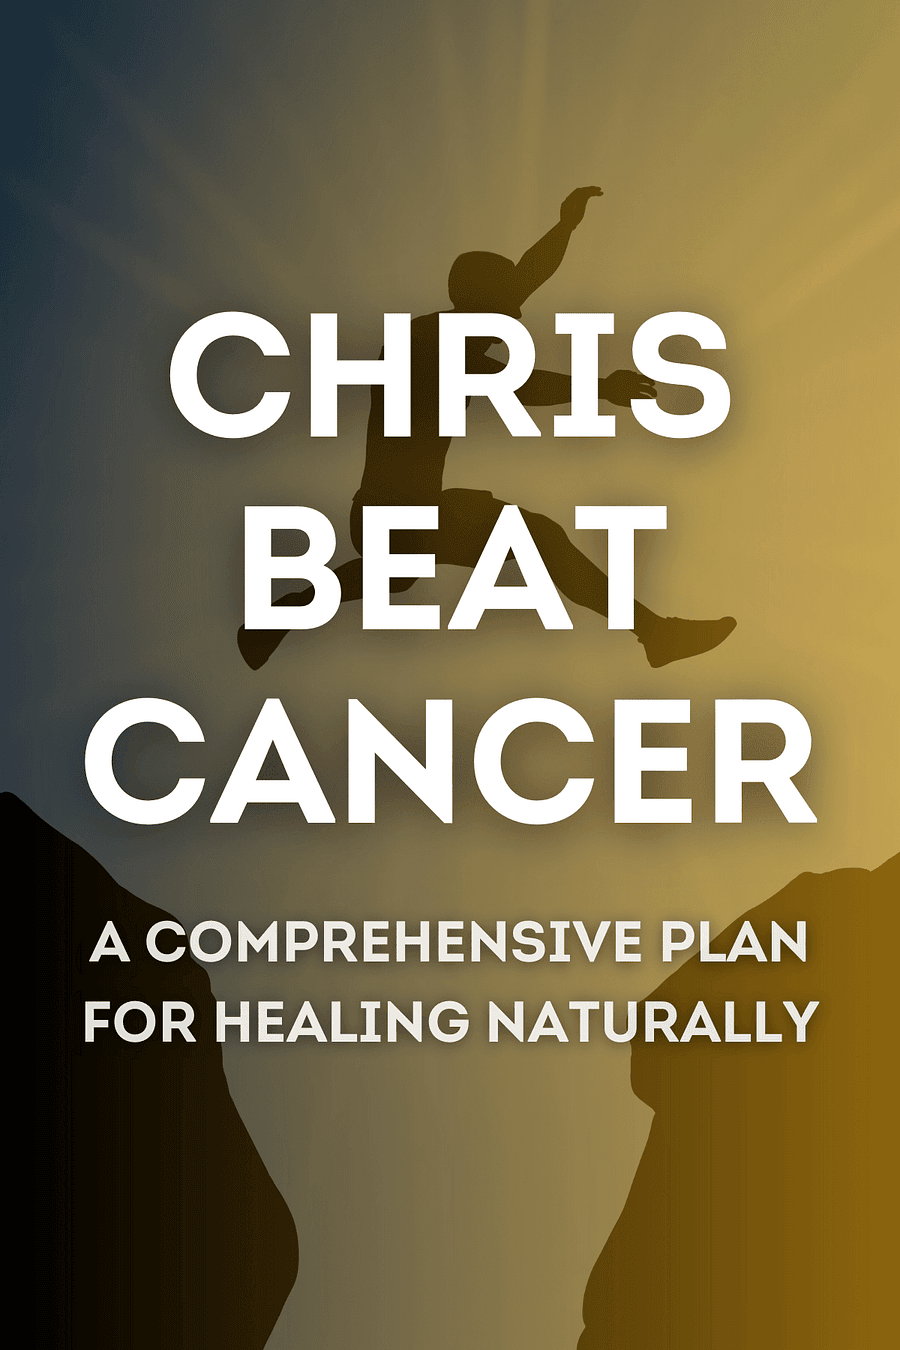 Chris Beat Cancer by Chris Wark - Book Summary